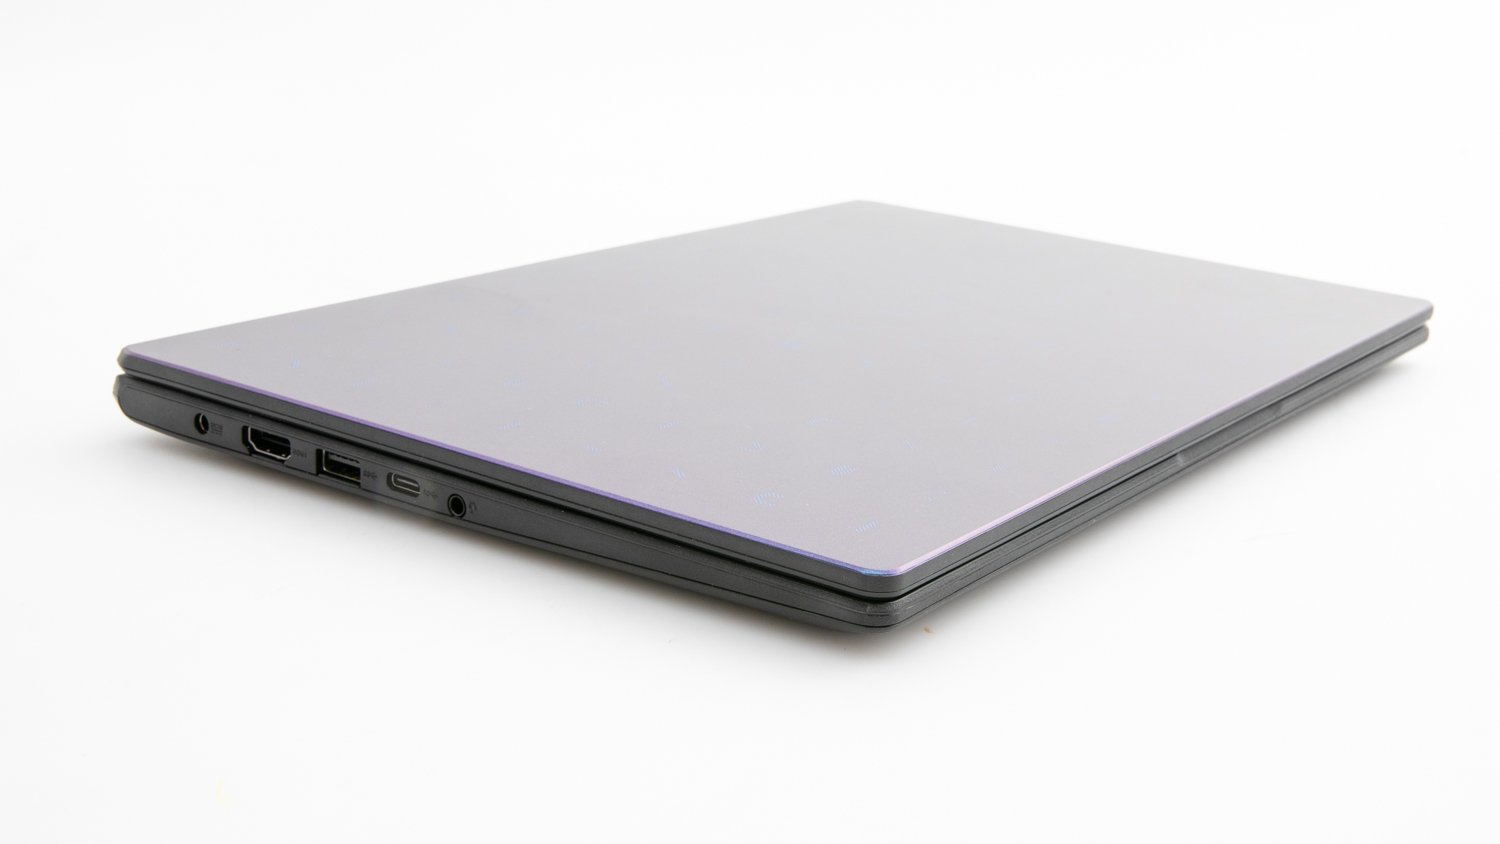 Asus E410m E410ma Ek005ts Review Laptop And Tablet Choice 7179